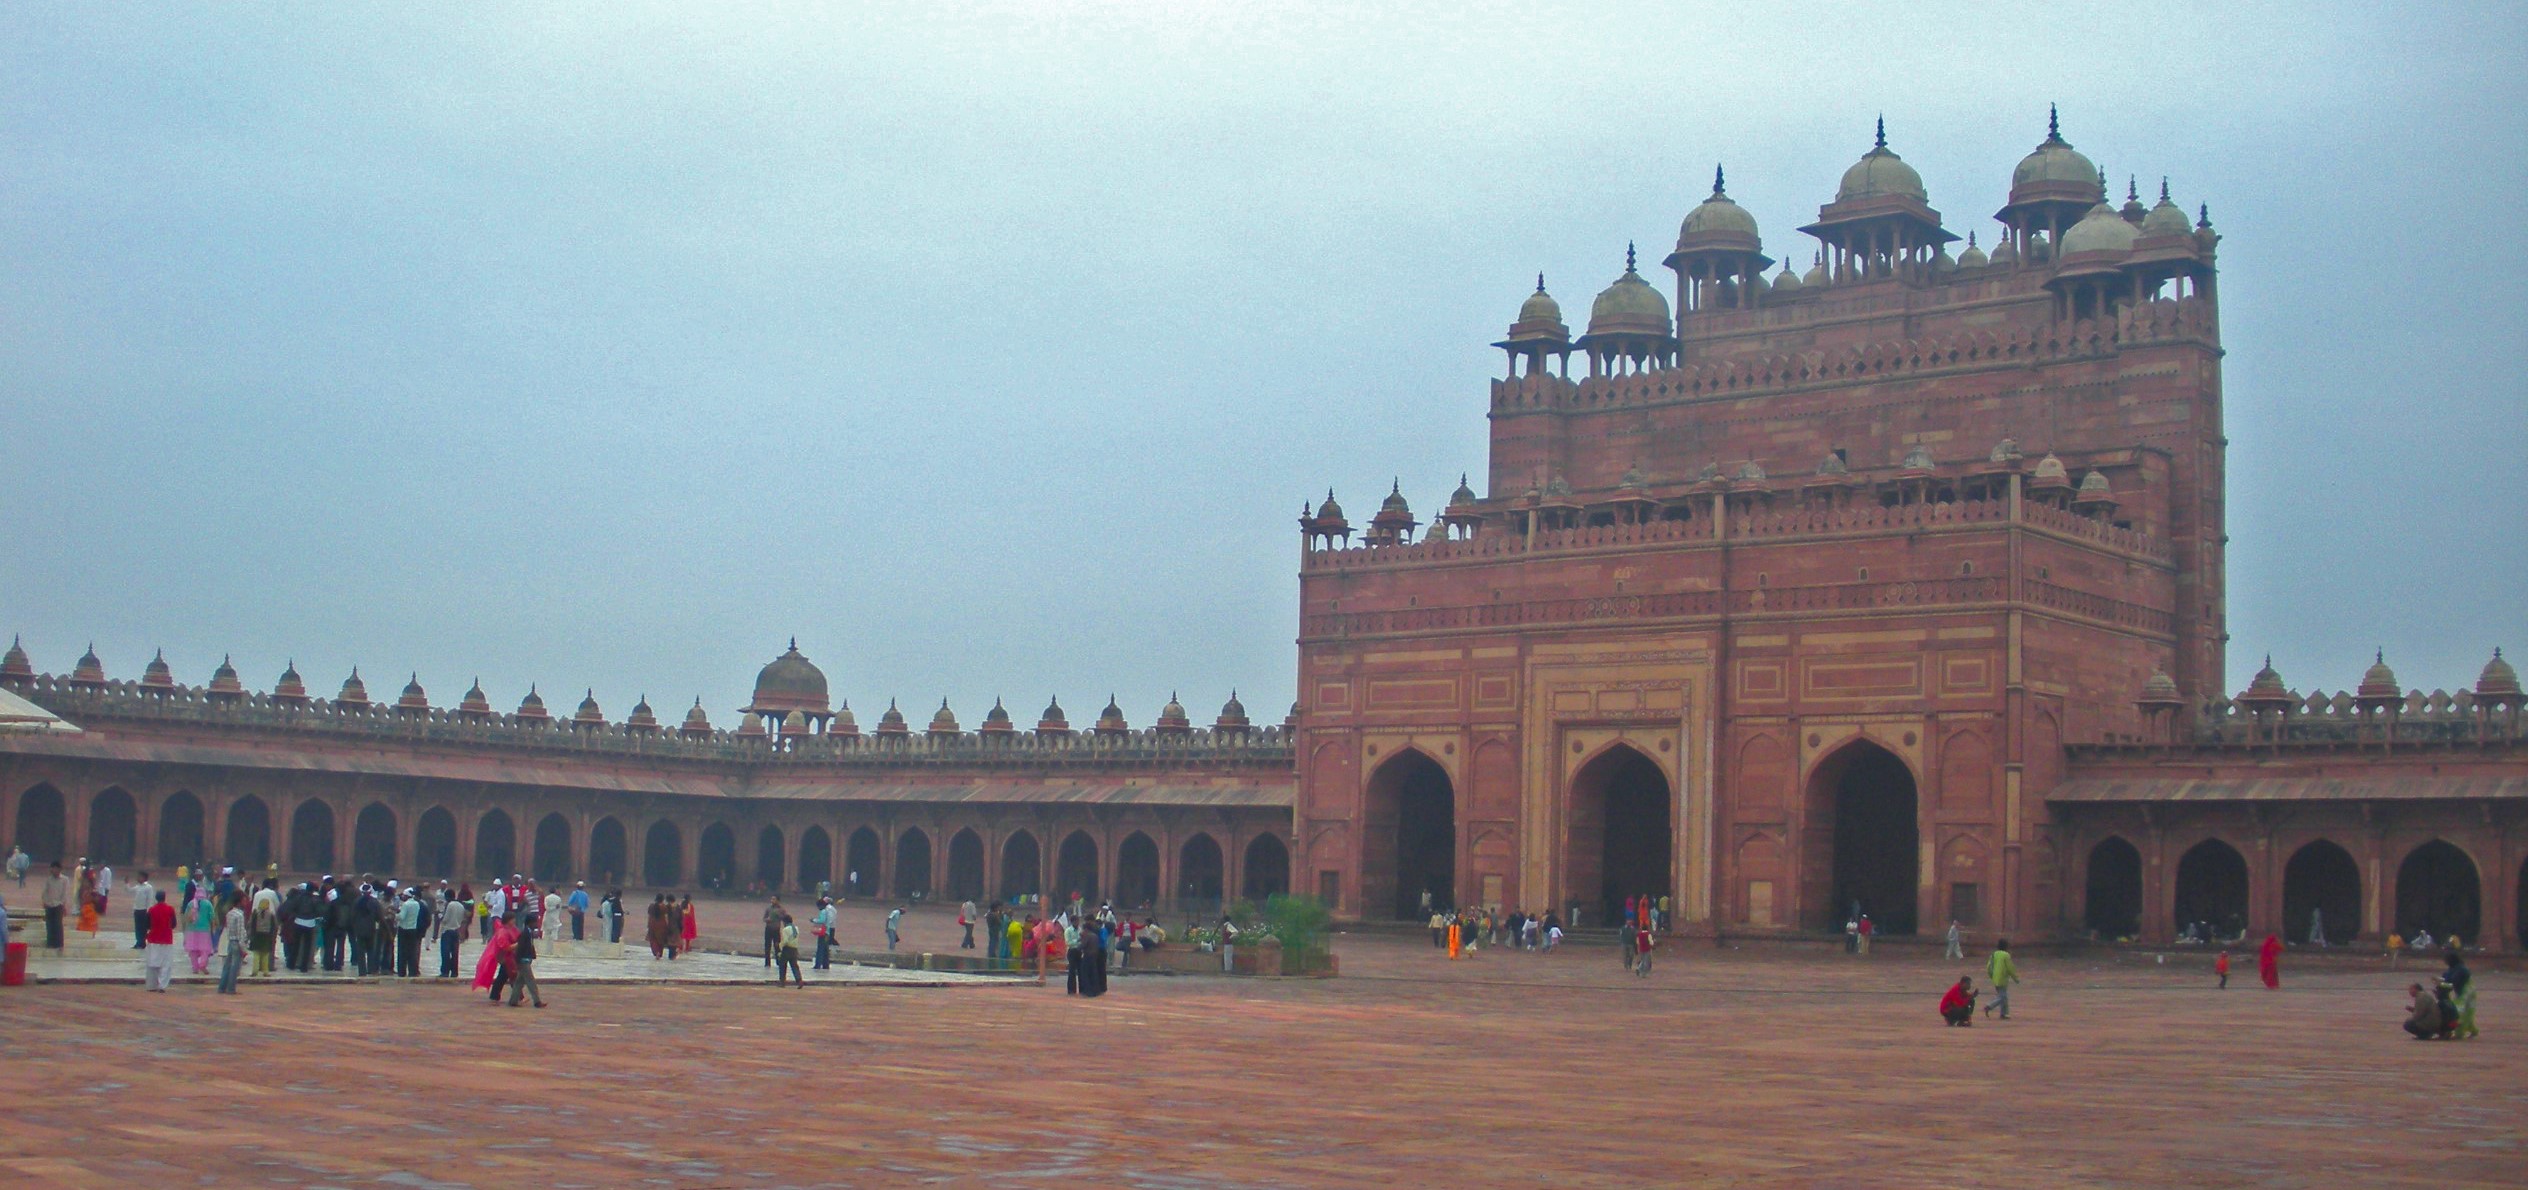 Buland_Darwaza Jamia_Masjid_India